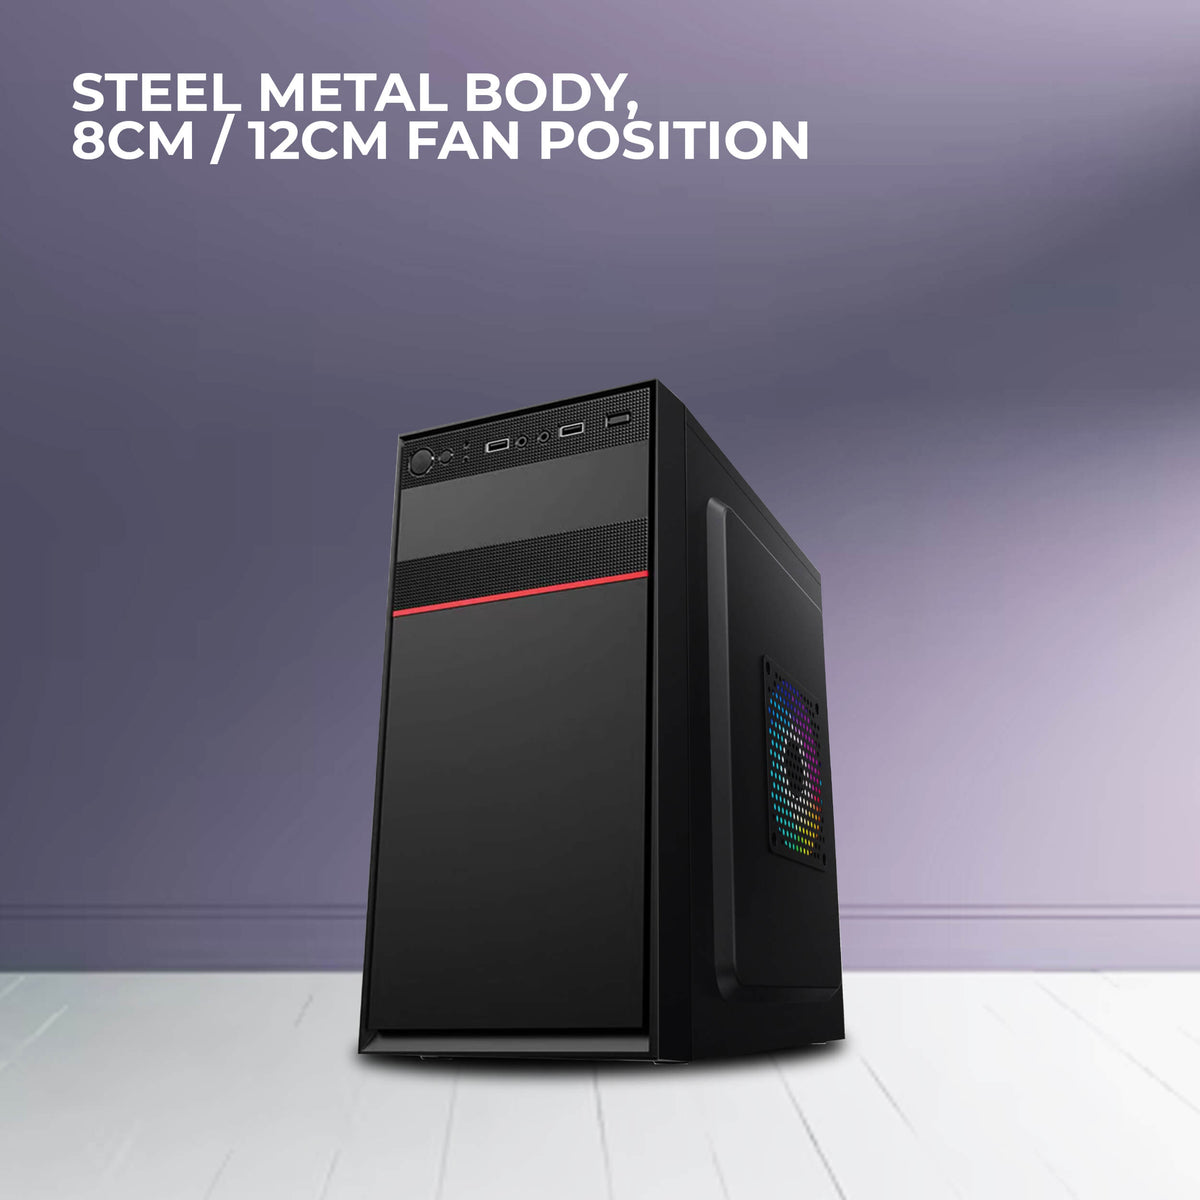 Foxin AMAR Desktop Computer Case / PC Cabinet - with Steel Metal Body | Front Panel 2 x USB 1.0 Port | HD Audio / MIC Jack Port | 8 CM x 12 CM Fan Position